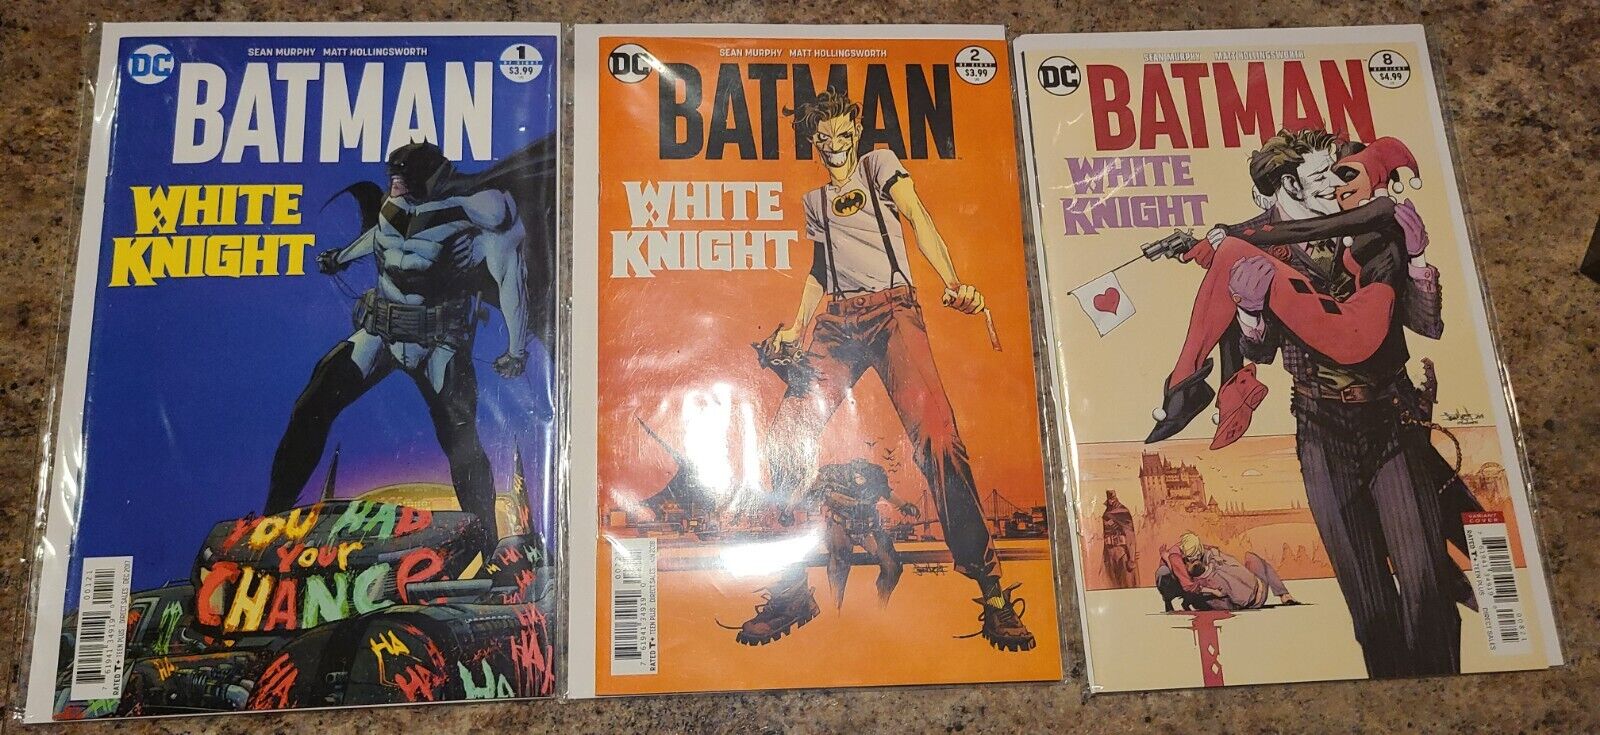 Batman White Knight Lot 1 2 8 Volumes